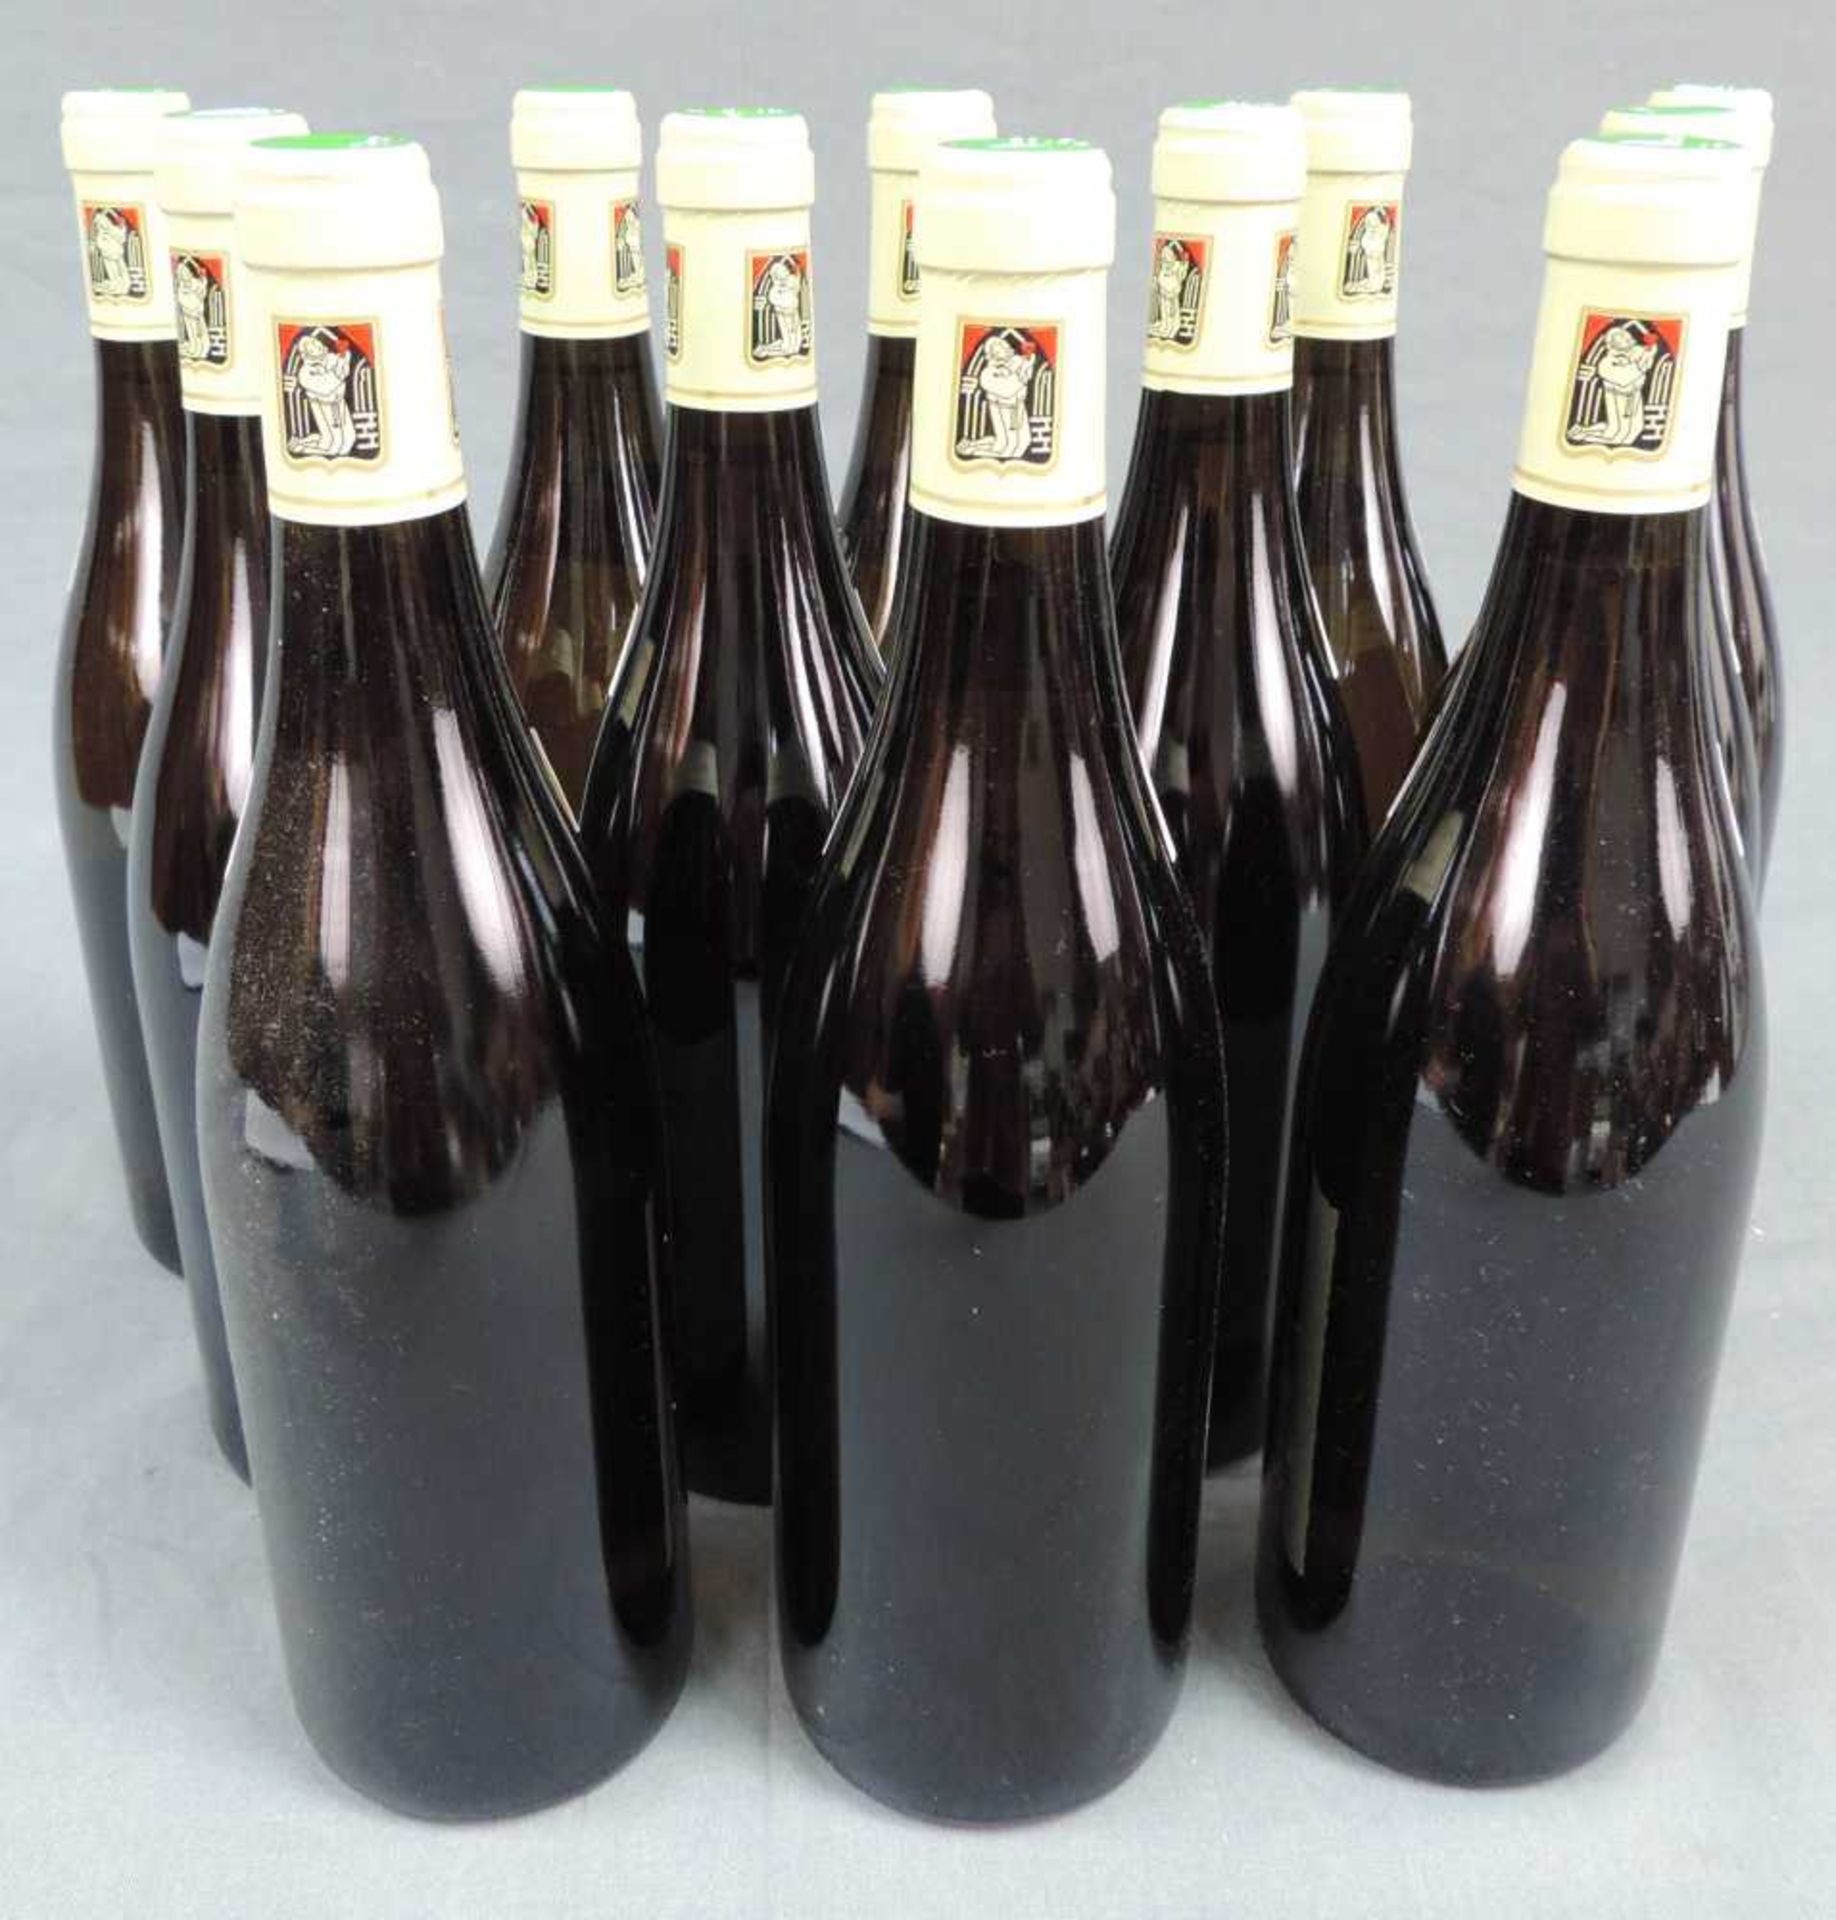 2002 Domaine Prieur - Brunet, Satenay en Boichot, France. 12 Flaschen, 750 ml, Alc., 13% by vol. AC. - Image 2 of 6